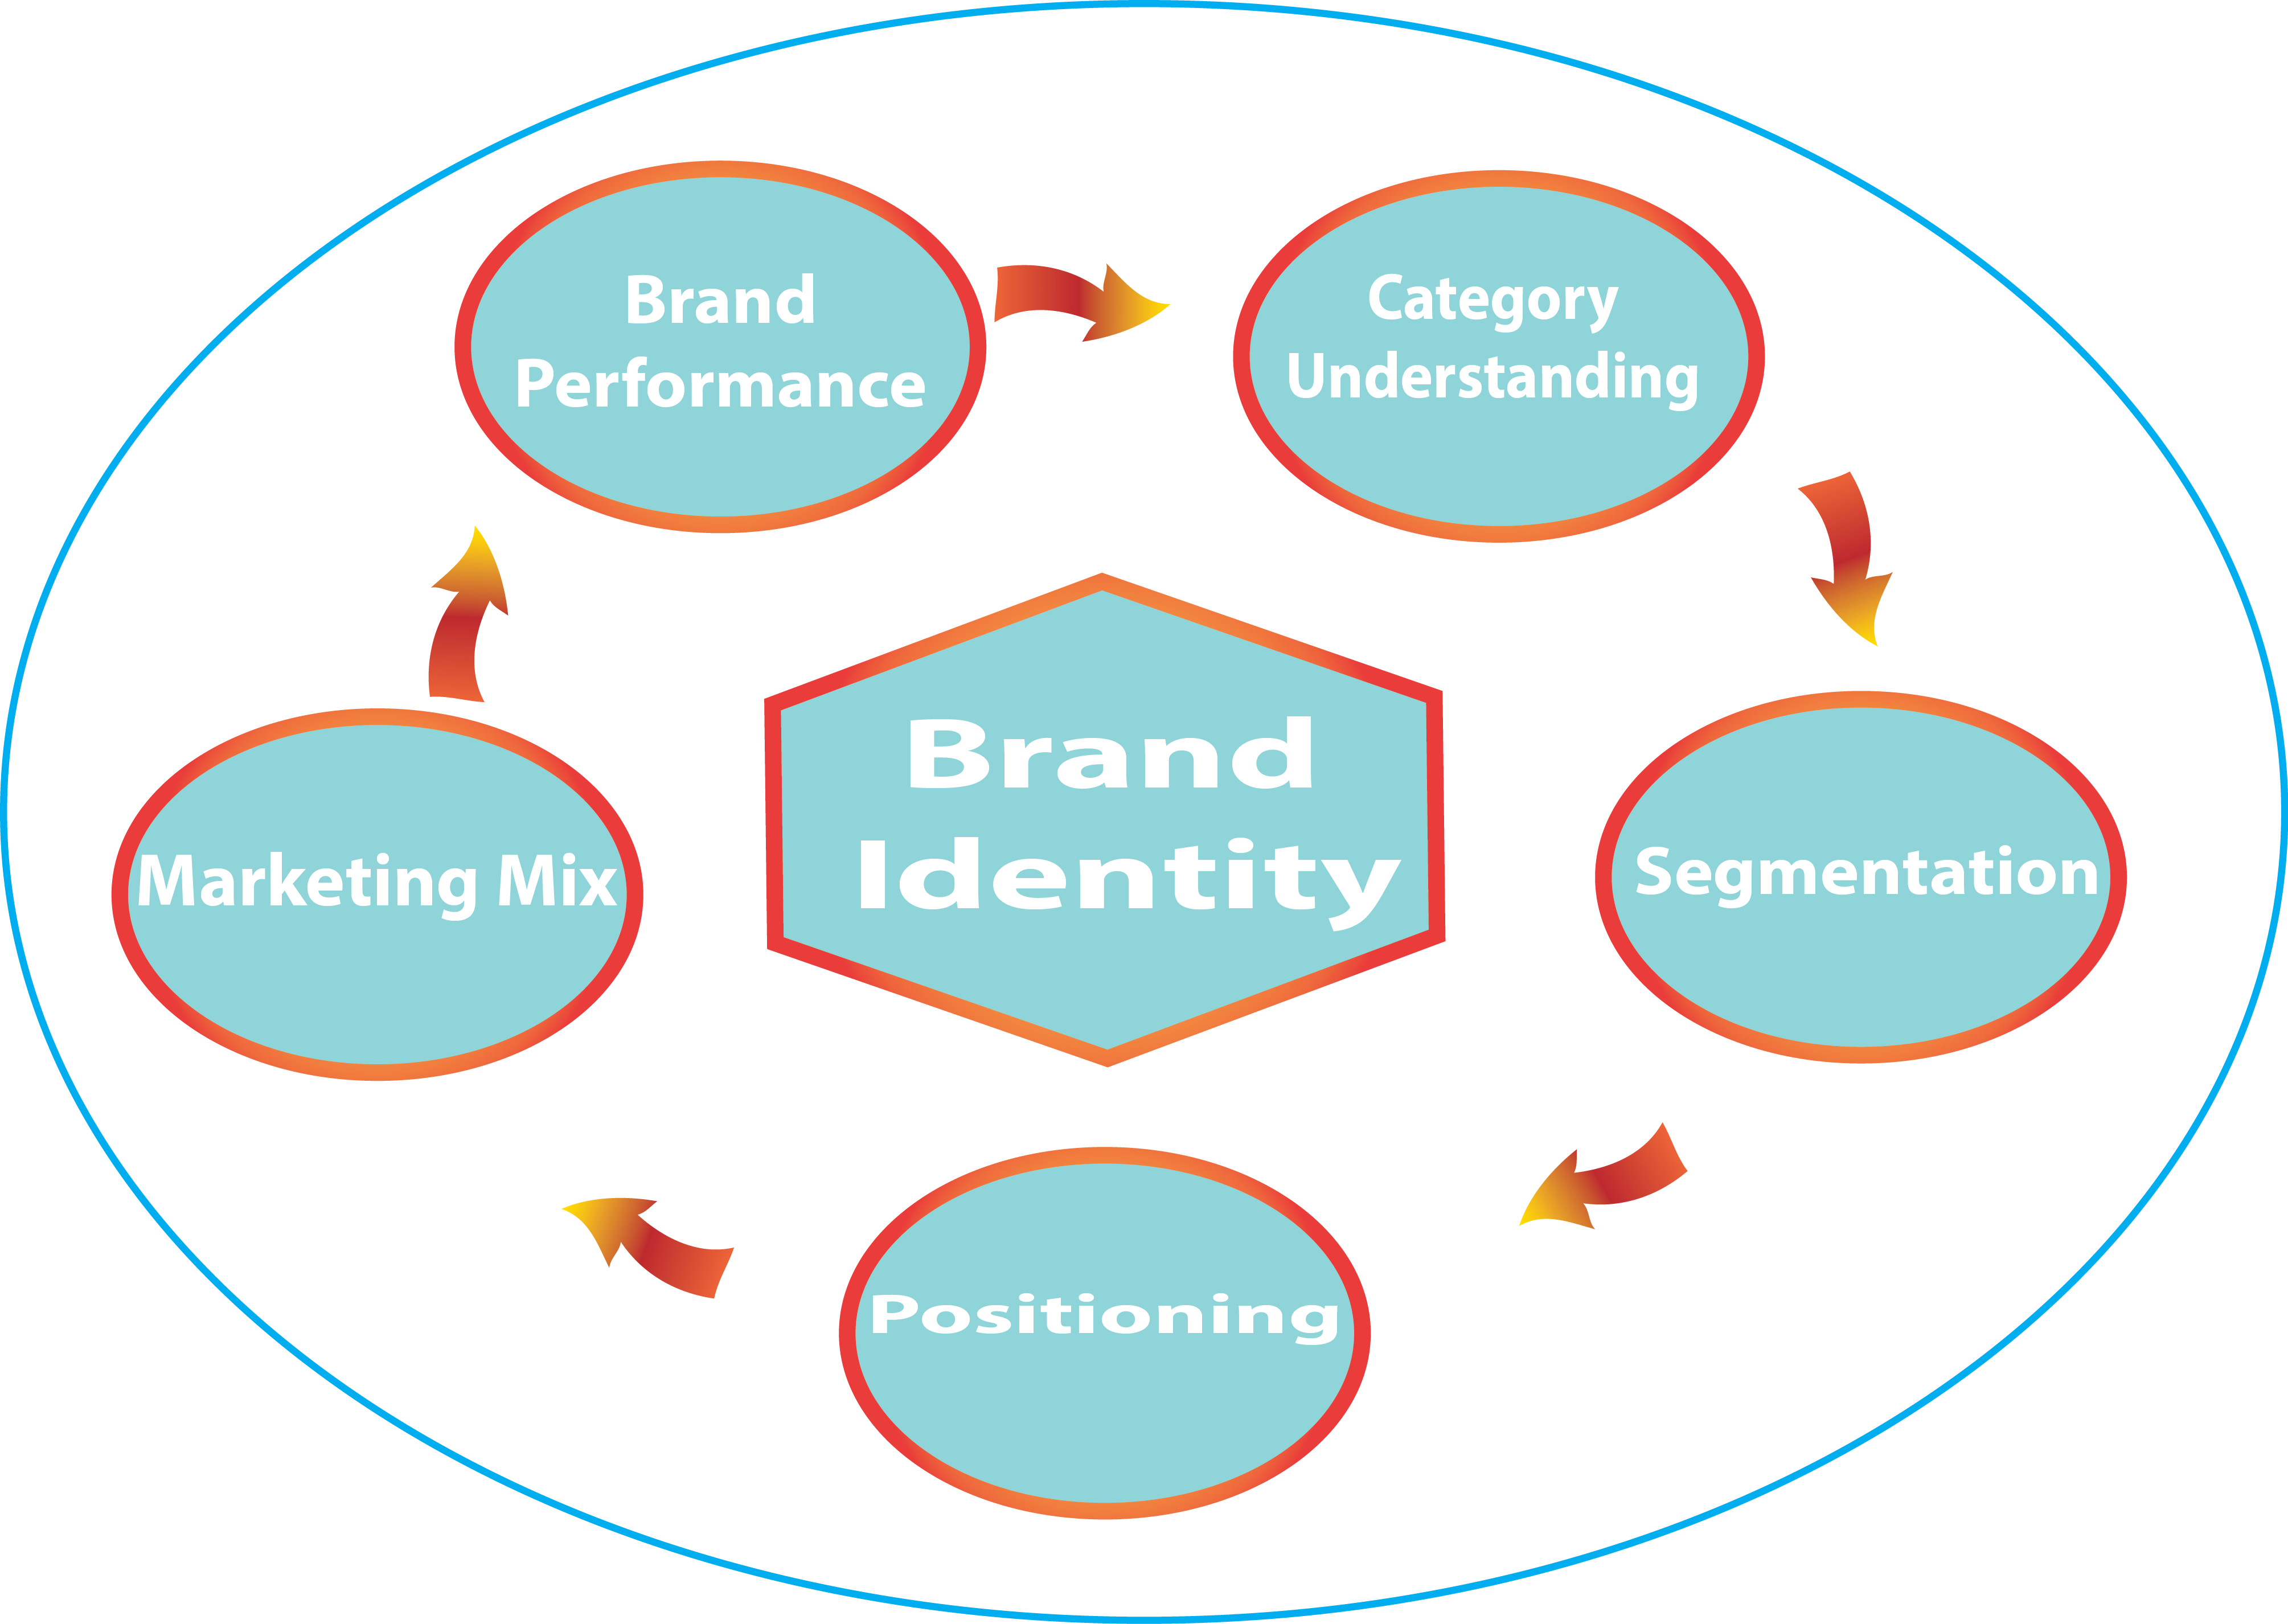 branding-identity